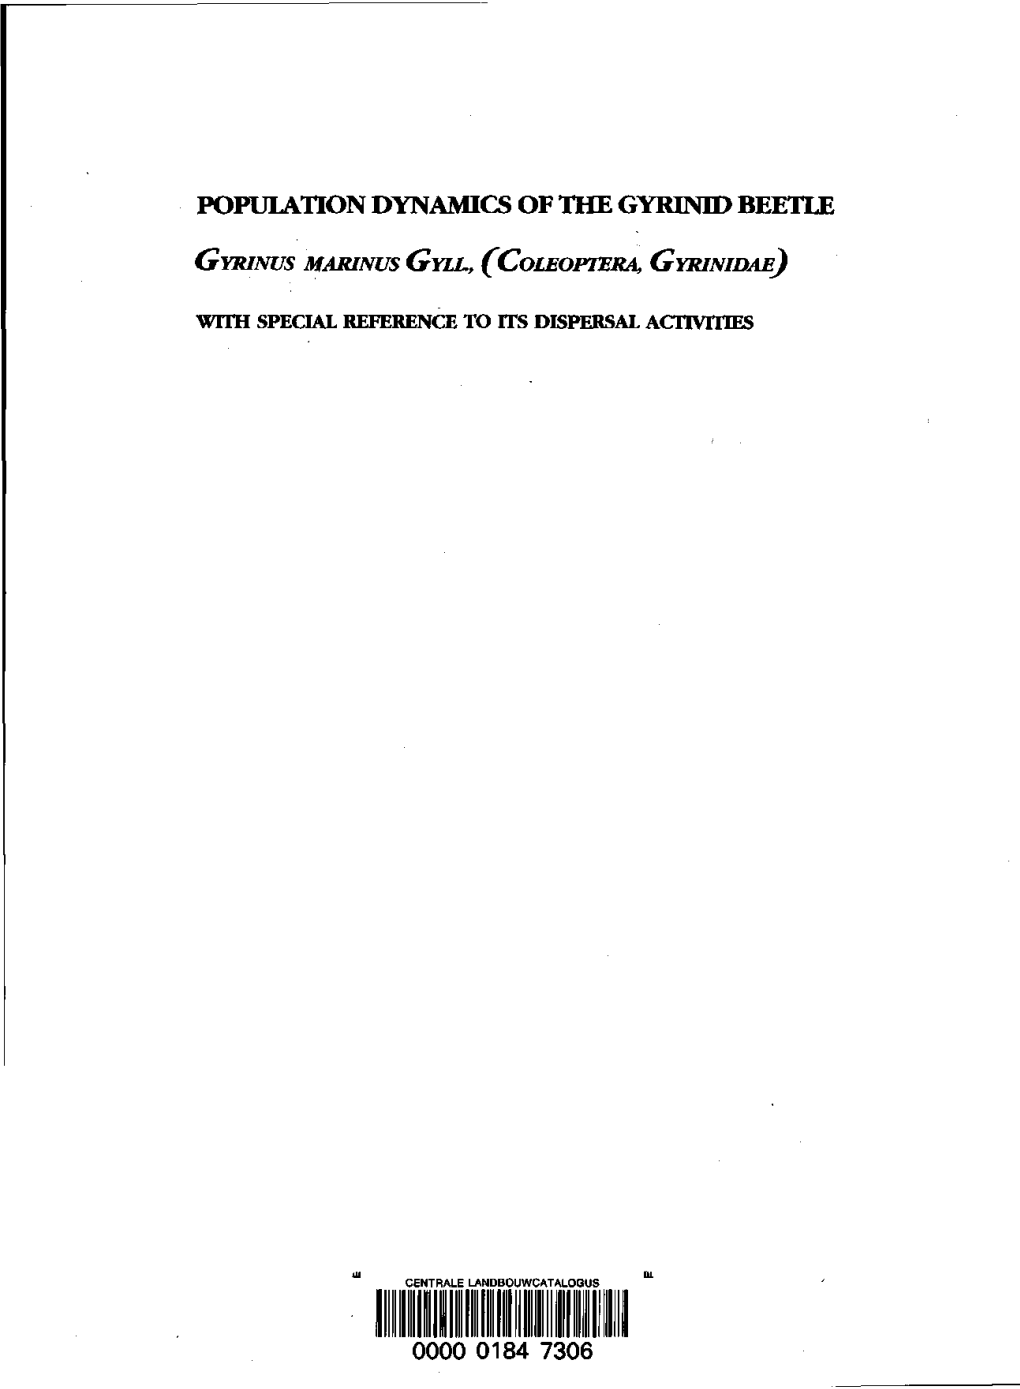 Population Dynamics of the Gyrinid Beetle 0000 0184 7306